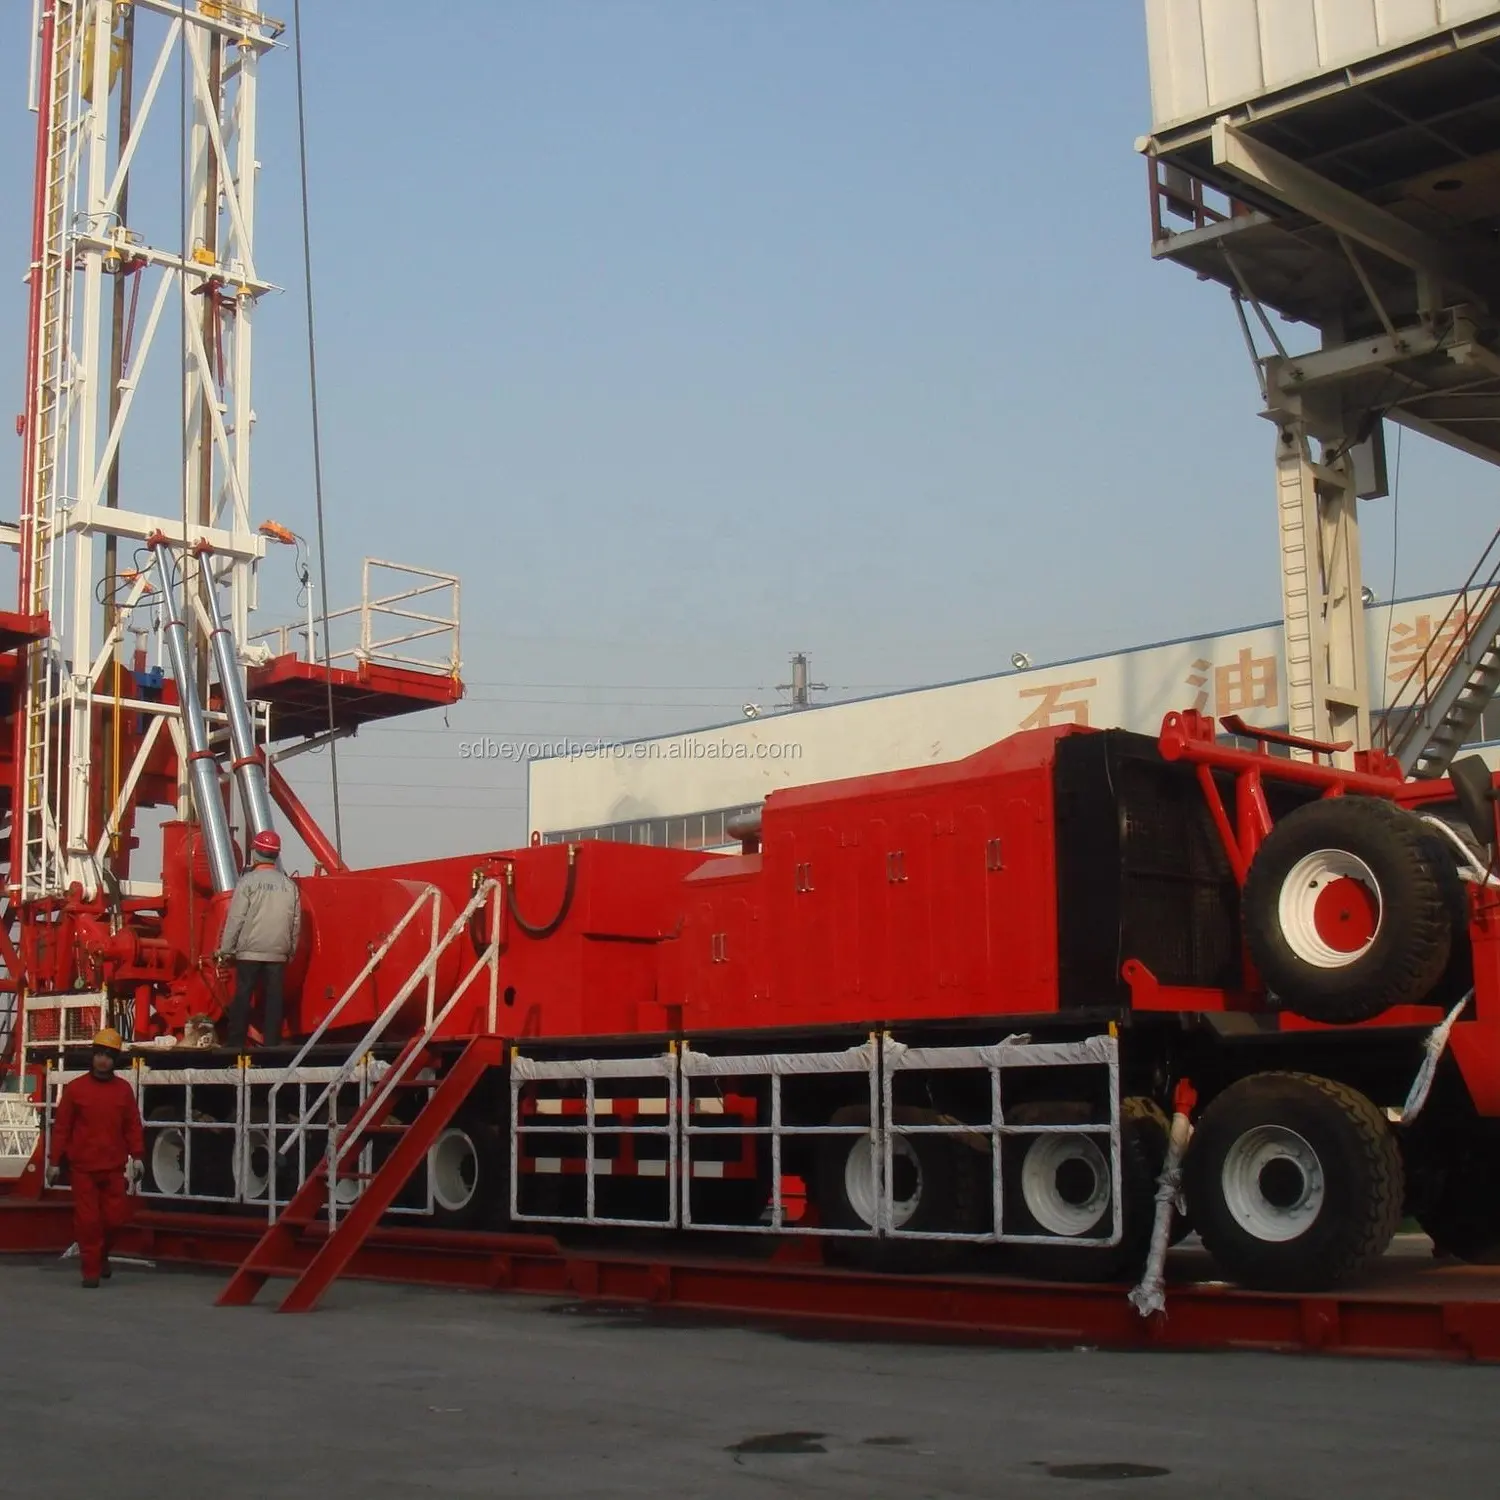 API 550HP آبار النفط معدات الغاز جهاز الألغام آلة حفر آبار صخور حقول النفط البحرية البرية النفط منصات حفر آبار